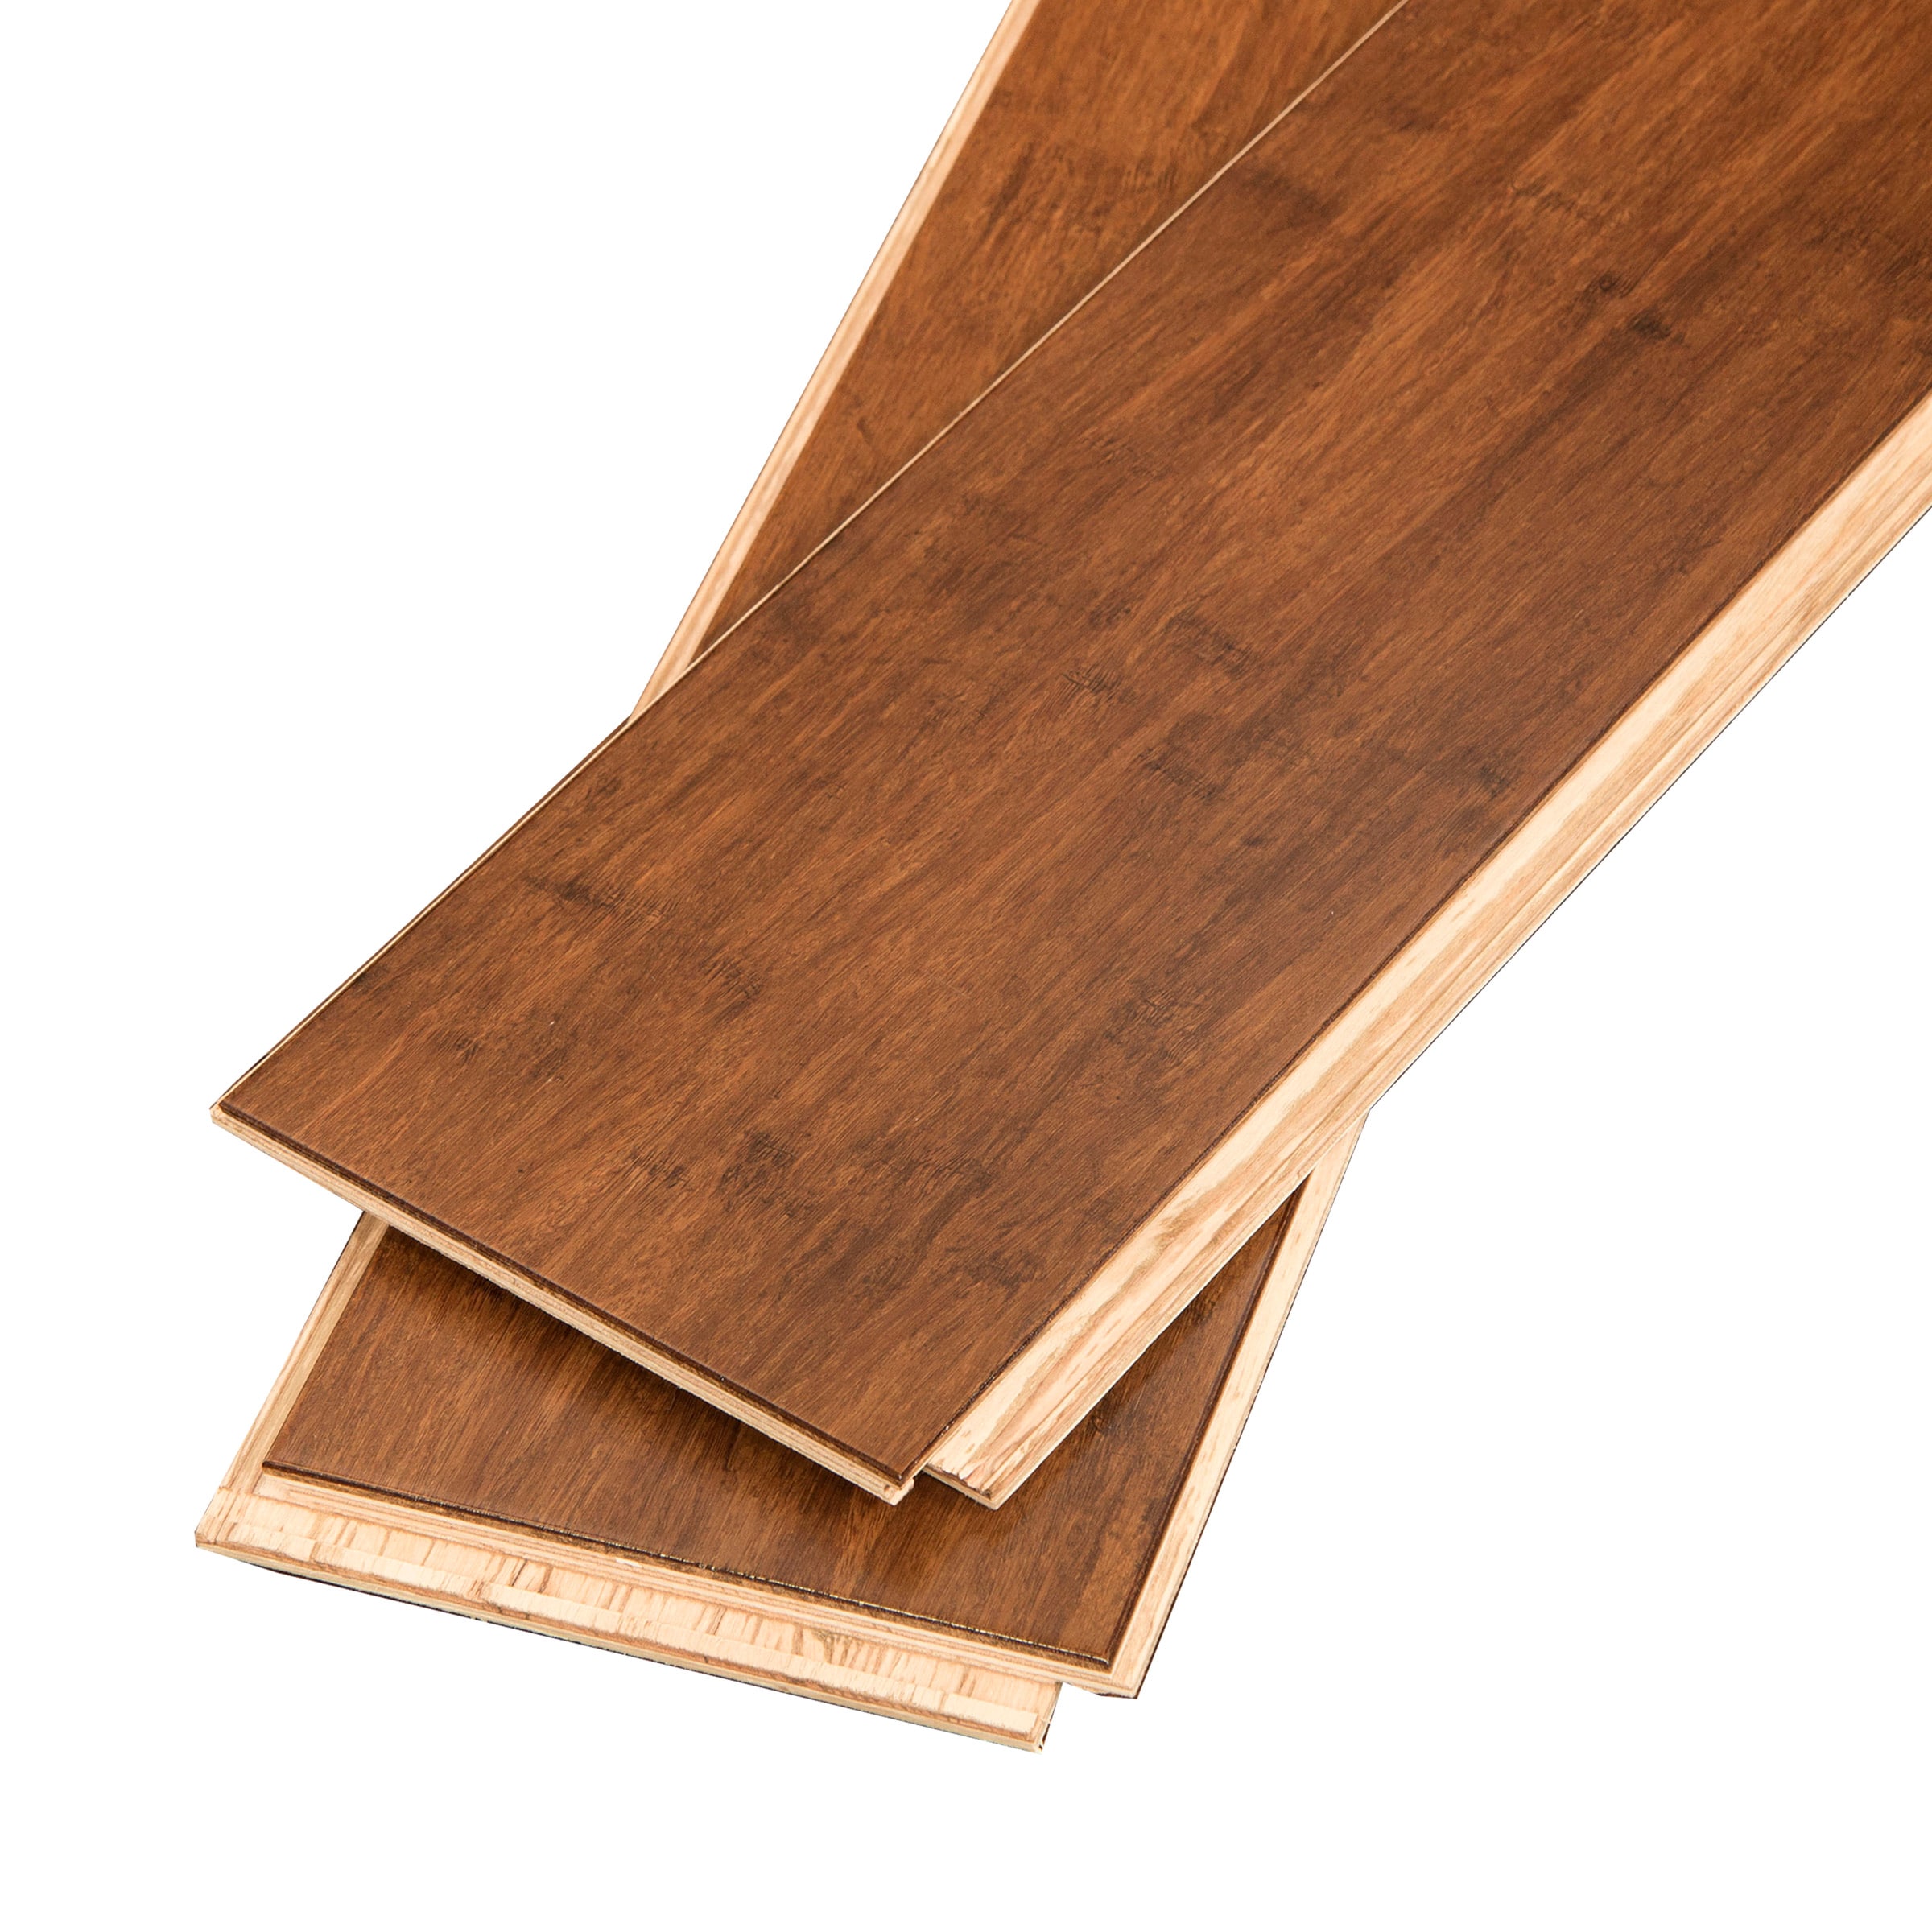 Woodcraft Woodshop Vert Carm .75x8x30 - Bamboo 3/4 x 8 x 30 Vertical  Grain Carmelized Dimensioned Wood